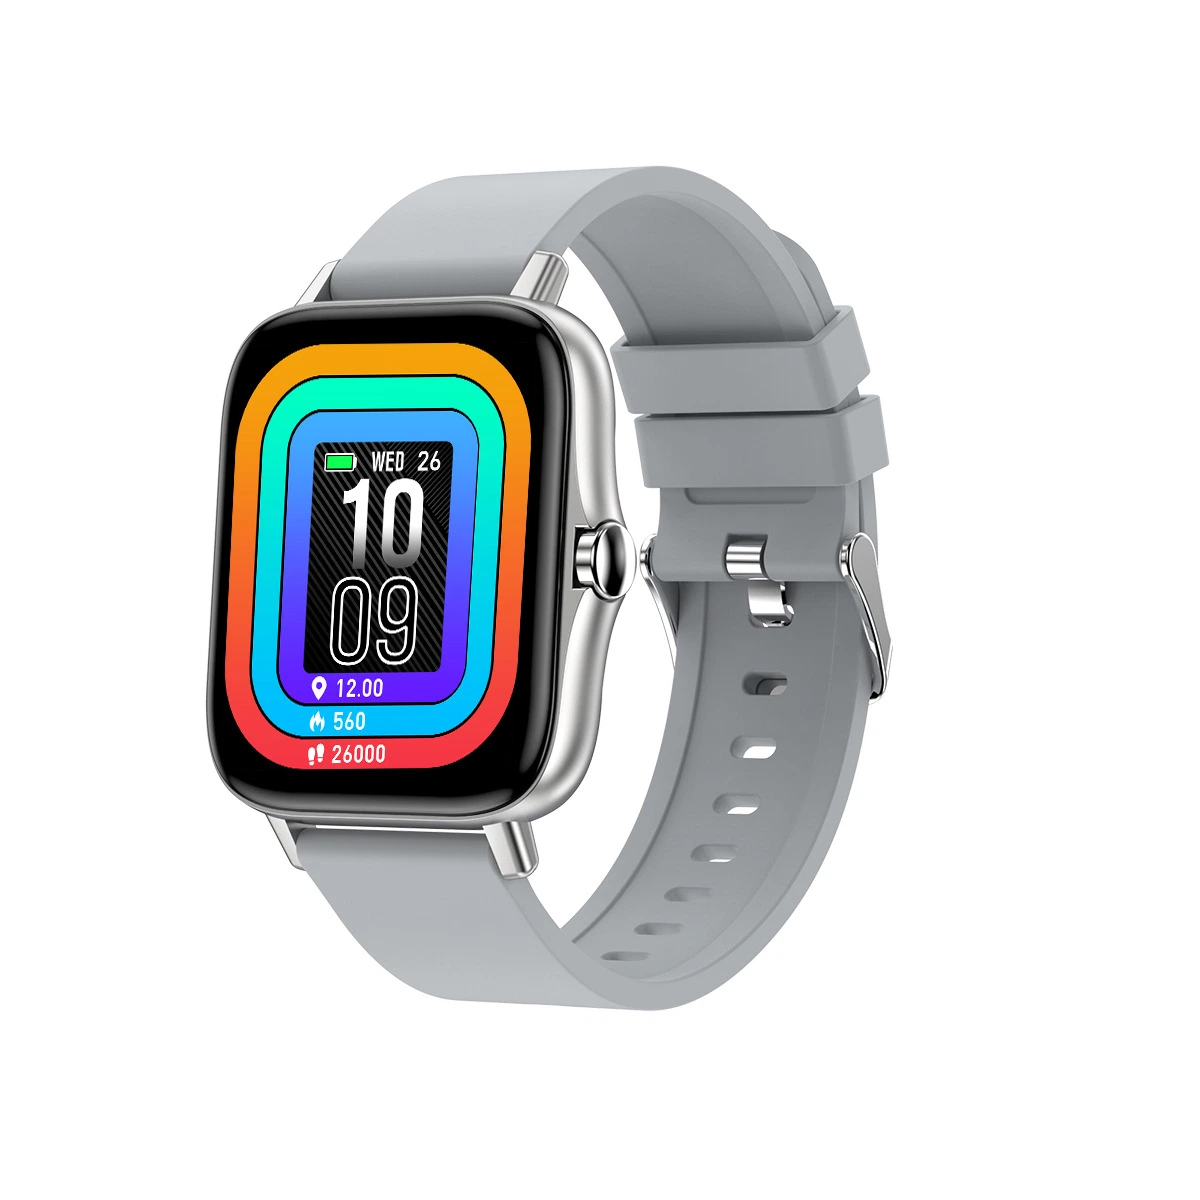 Large Touch Screen Smartwatch Sport Smart Watch